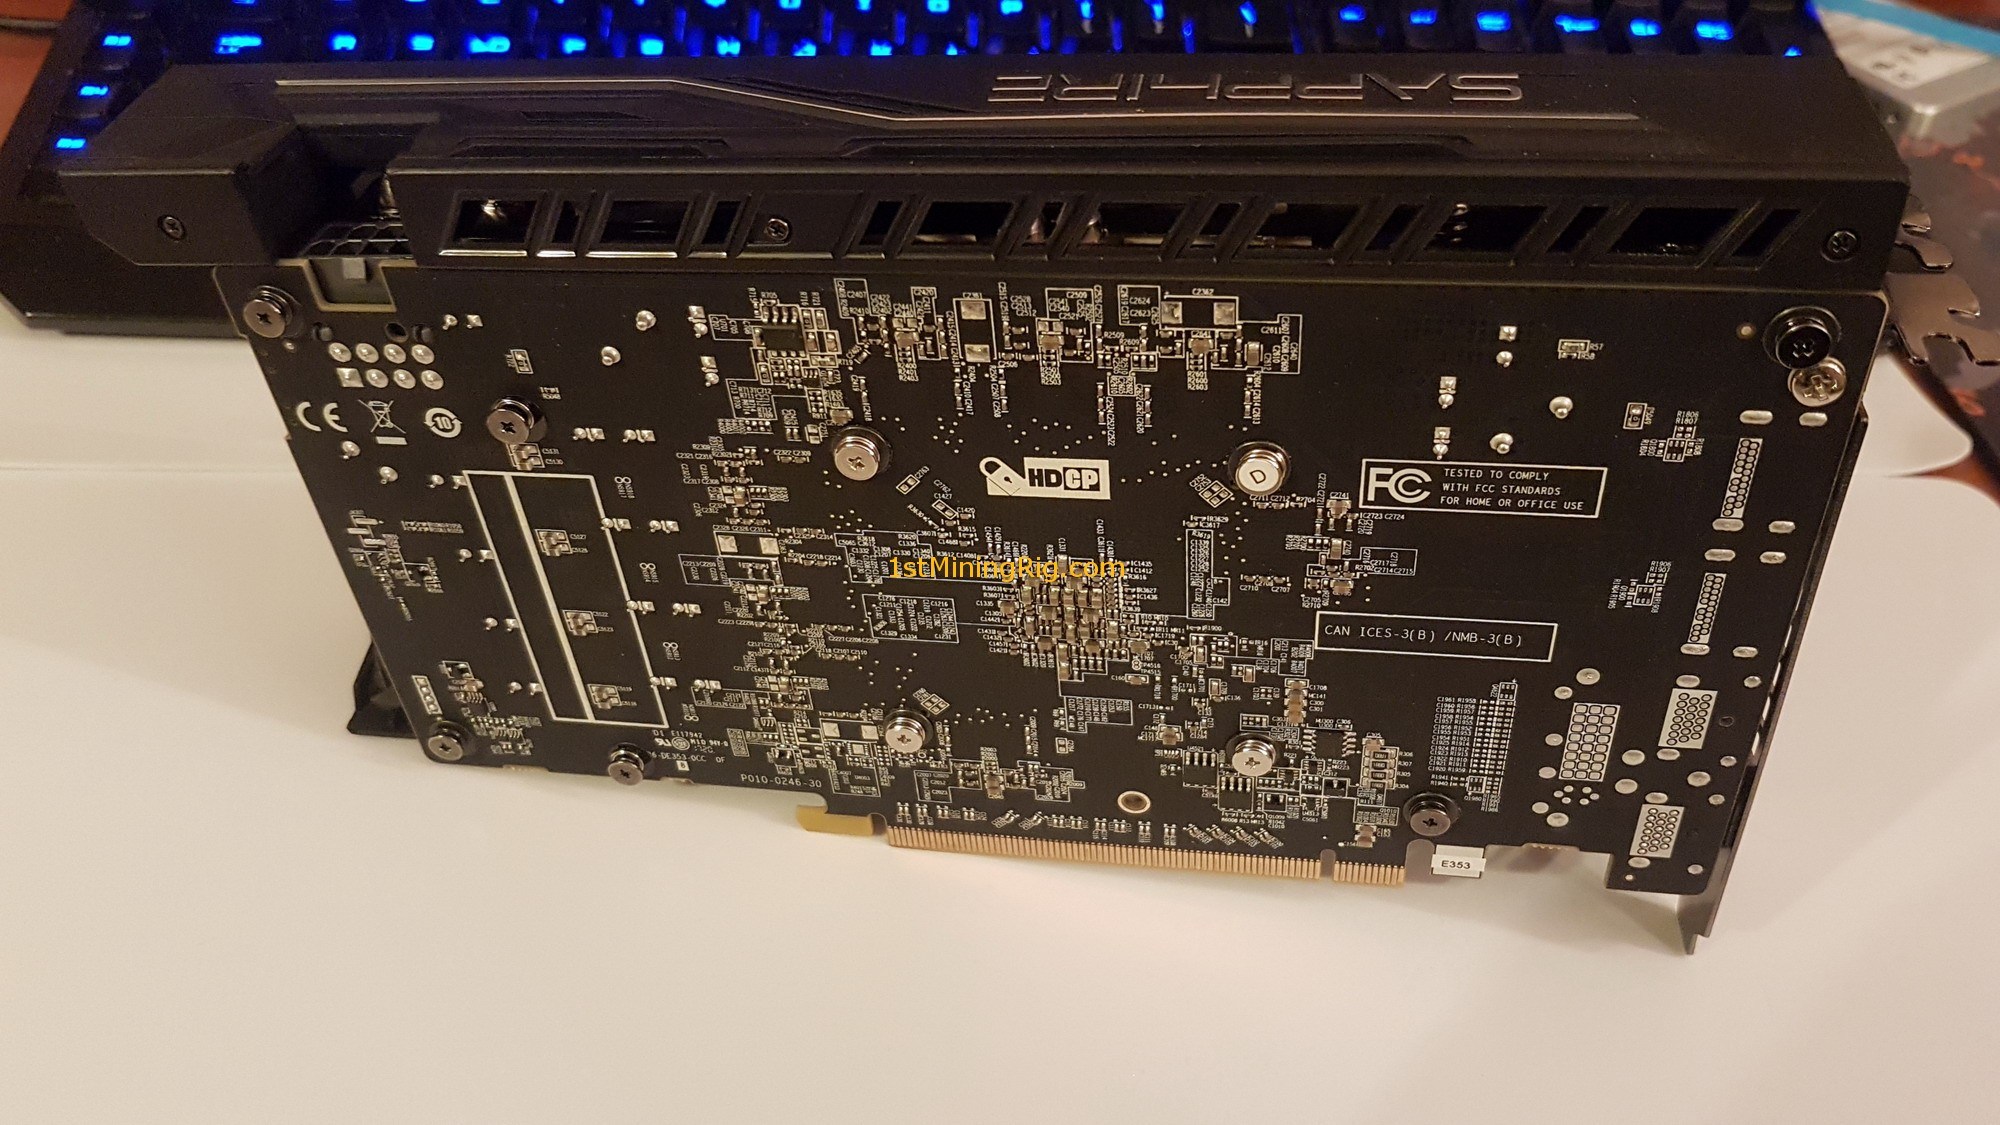 Лучший BIOS ROM для Sapphire RX 470 8GB Mining Edition с памятью Samsung (29-30 MH/s)